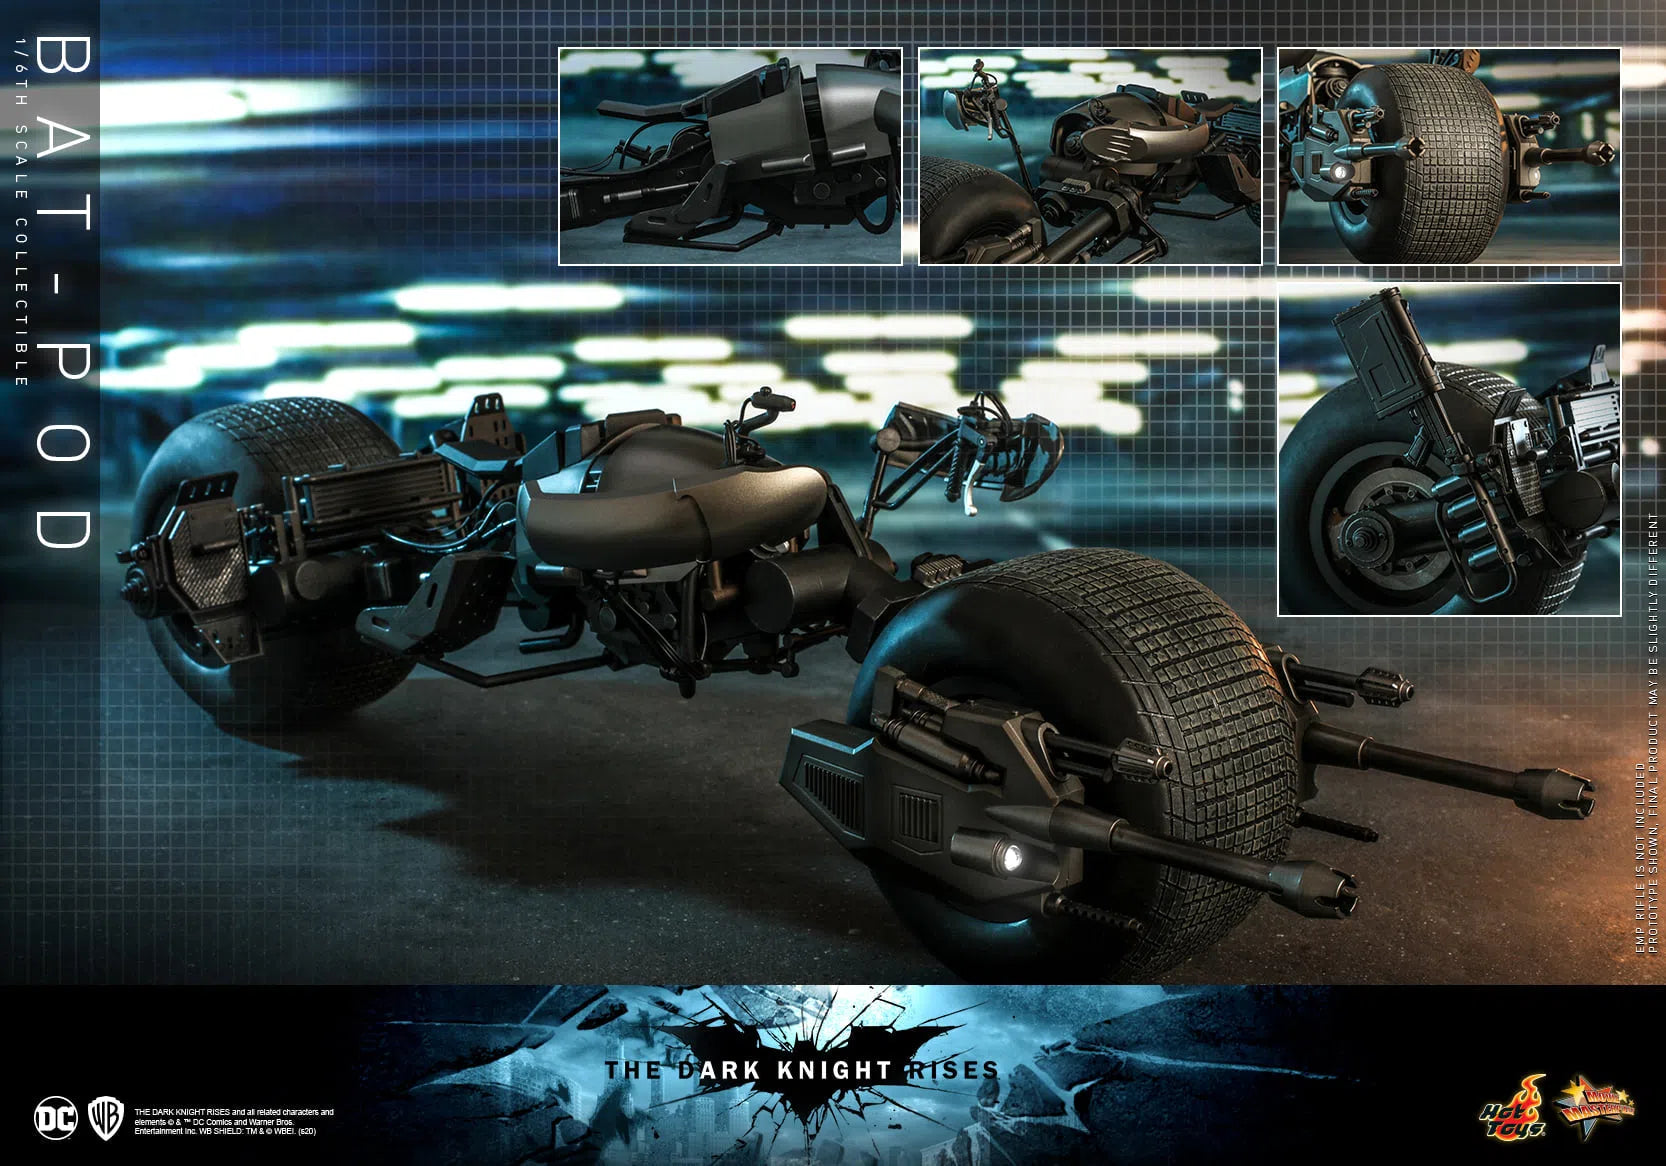 Bat-Pod: The Dark Knight Rises: MMS591: DC Comics Hot Toys